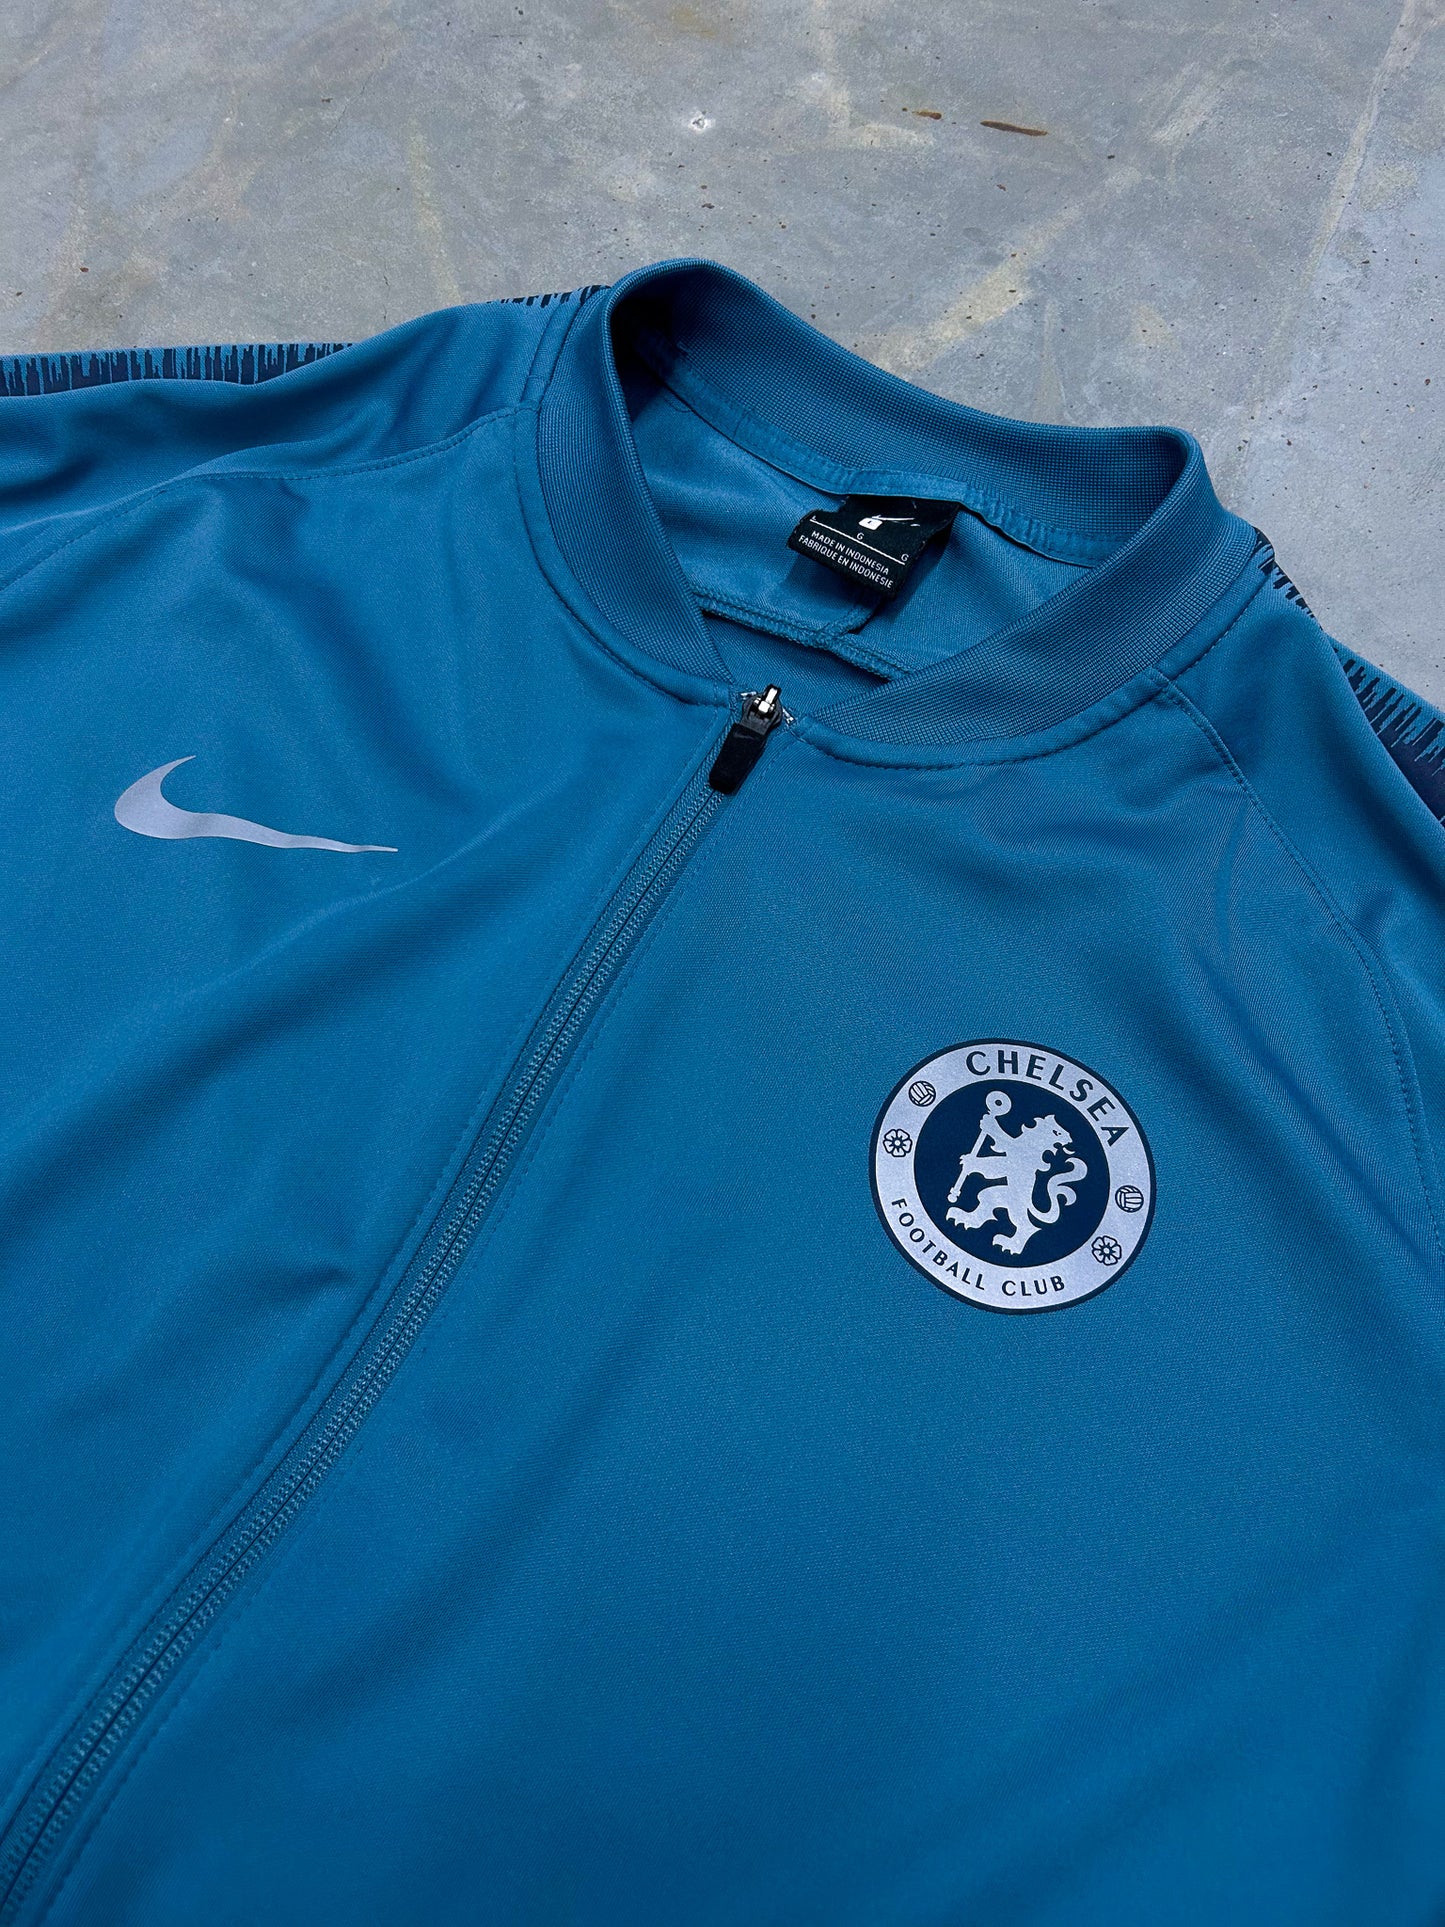 Nike x Chelsea Vintage Trackjacket | L